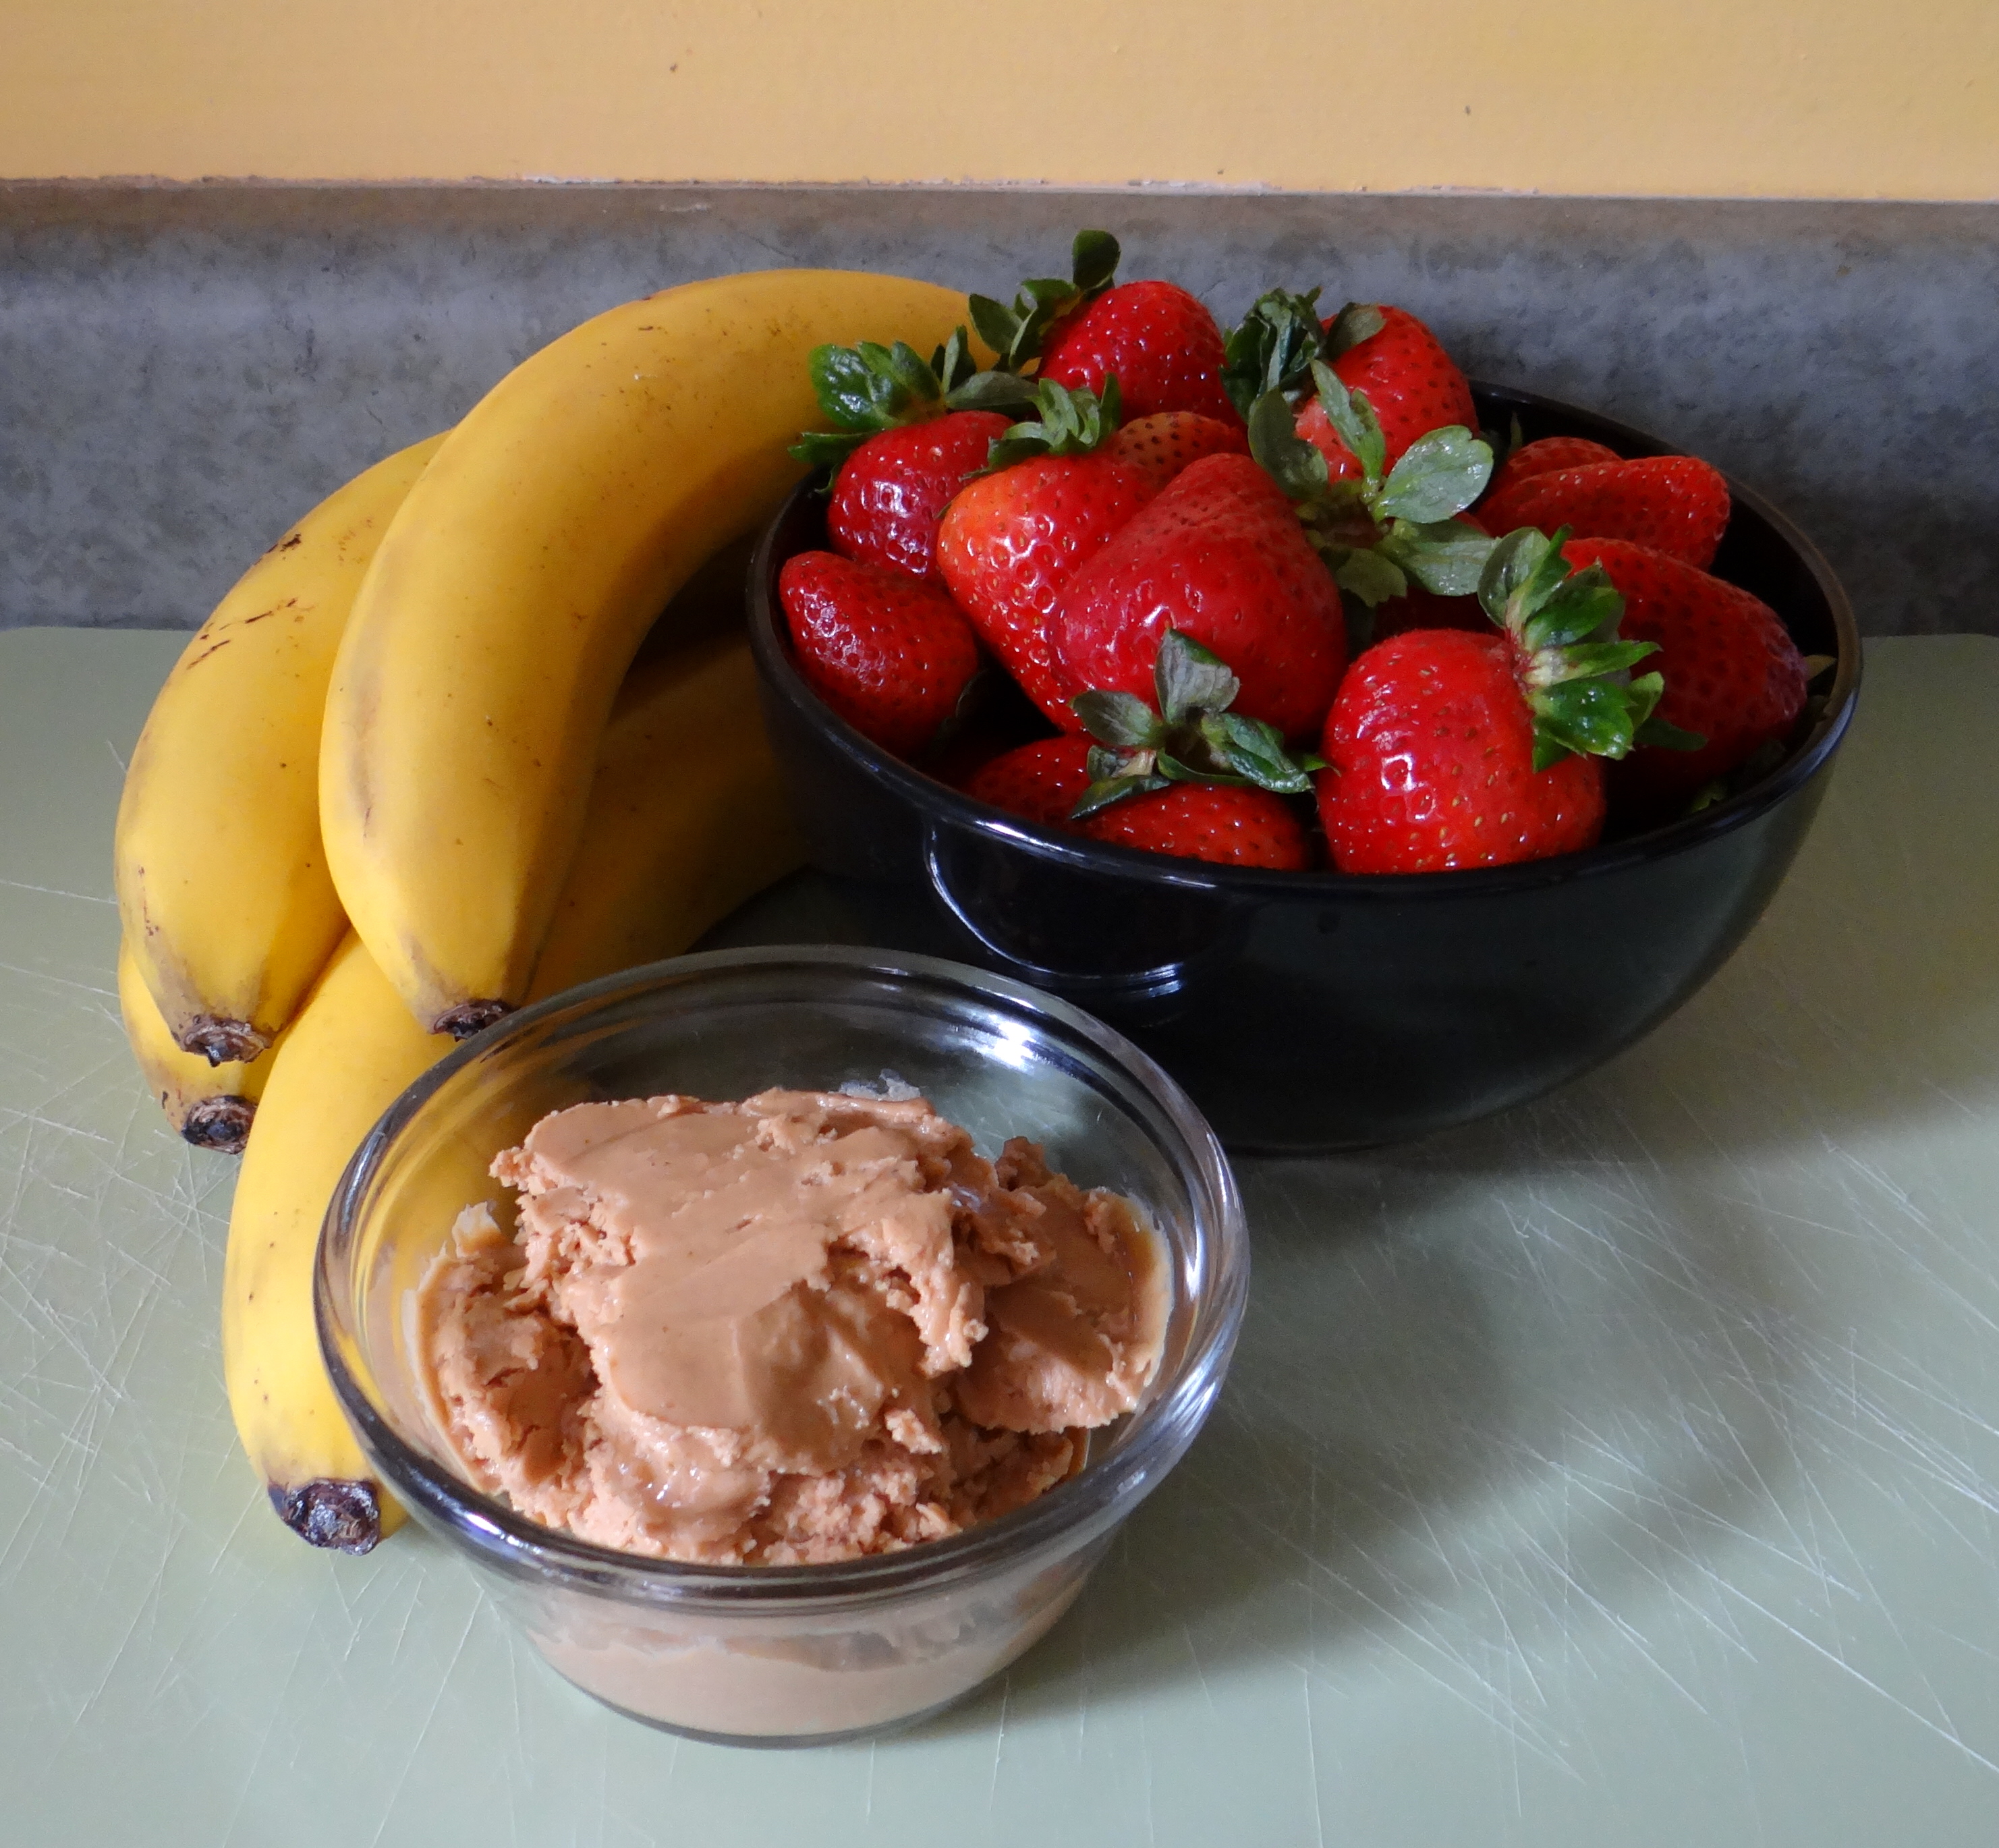 Organic bananas, strawberries, and peanut butter